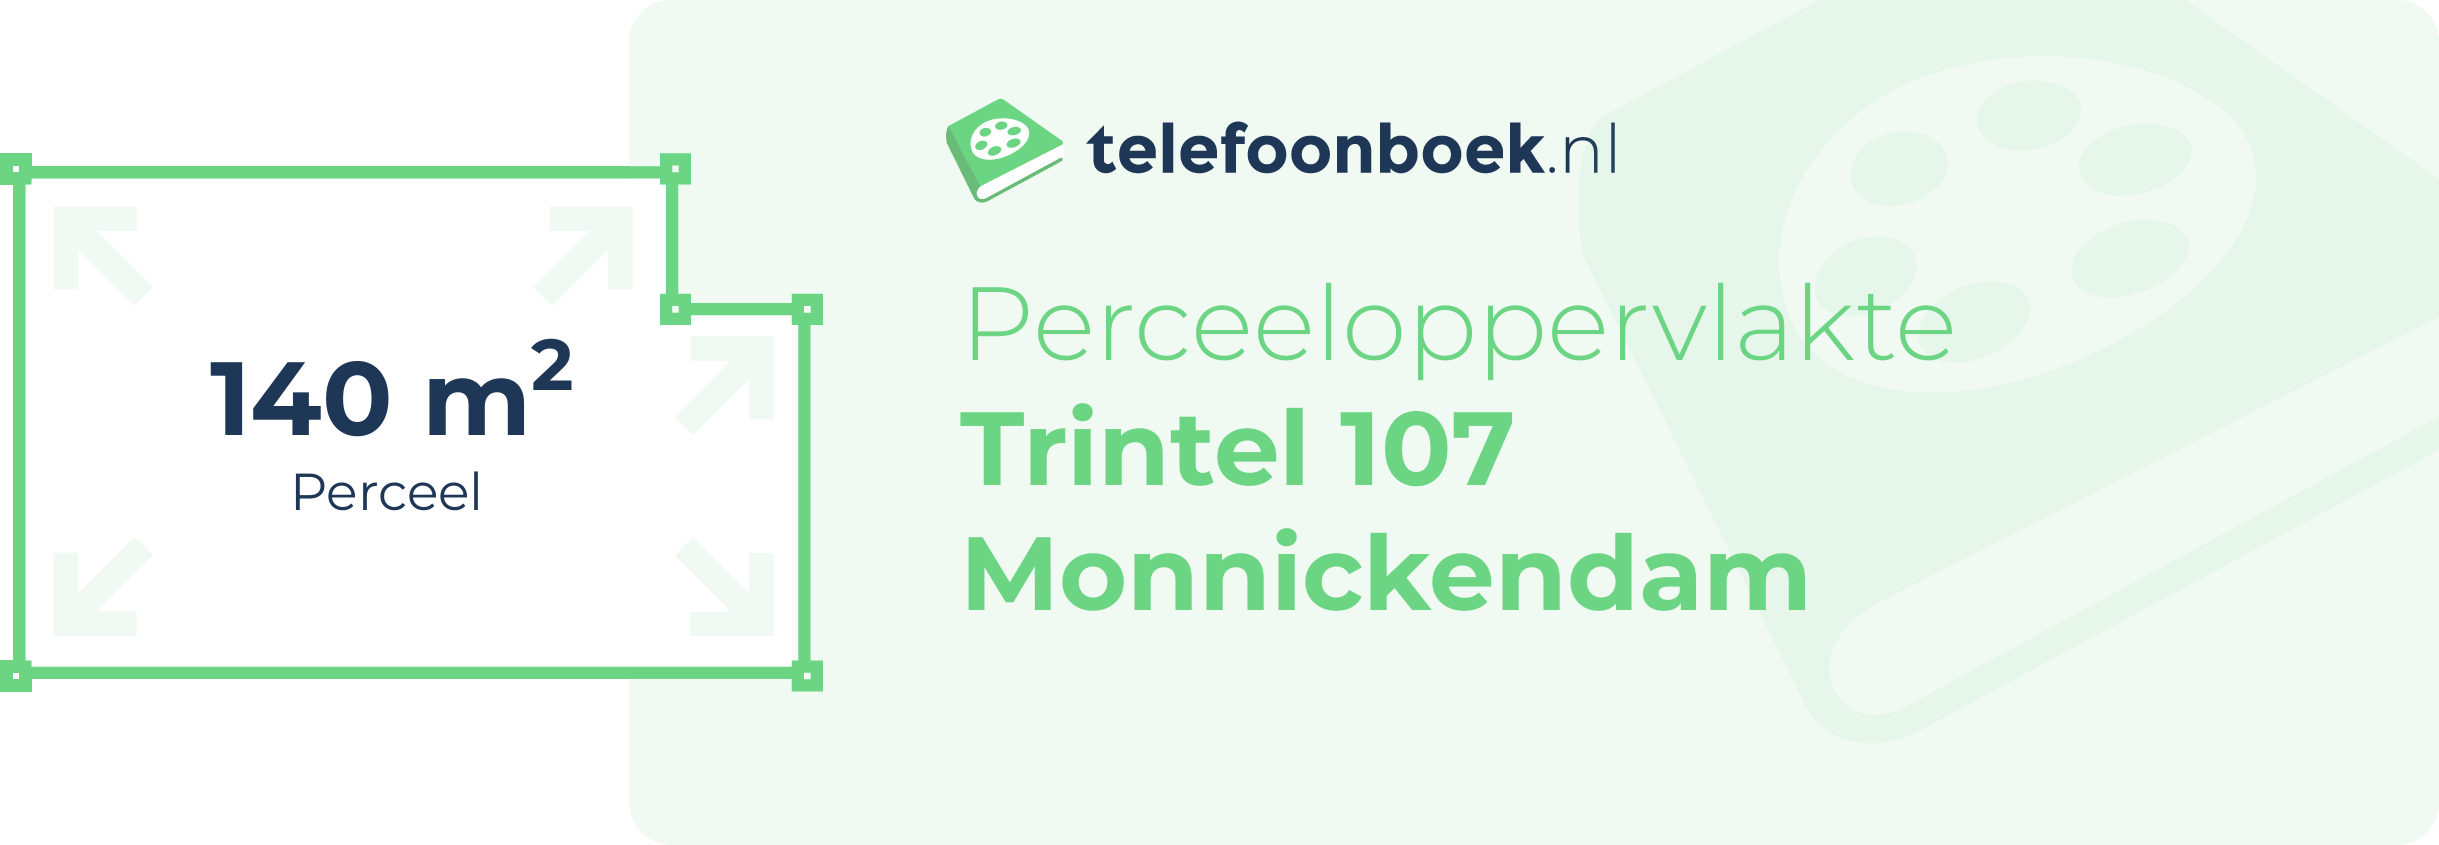 Perceeloppervlakte Trintel 107 Monnickendam